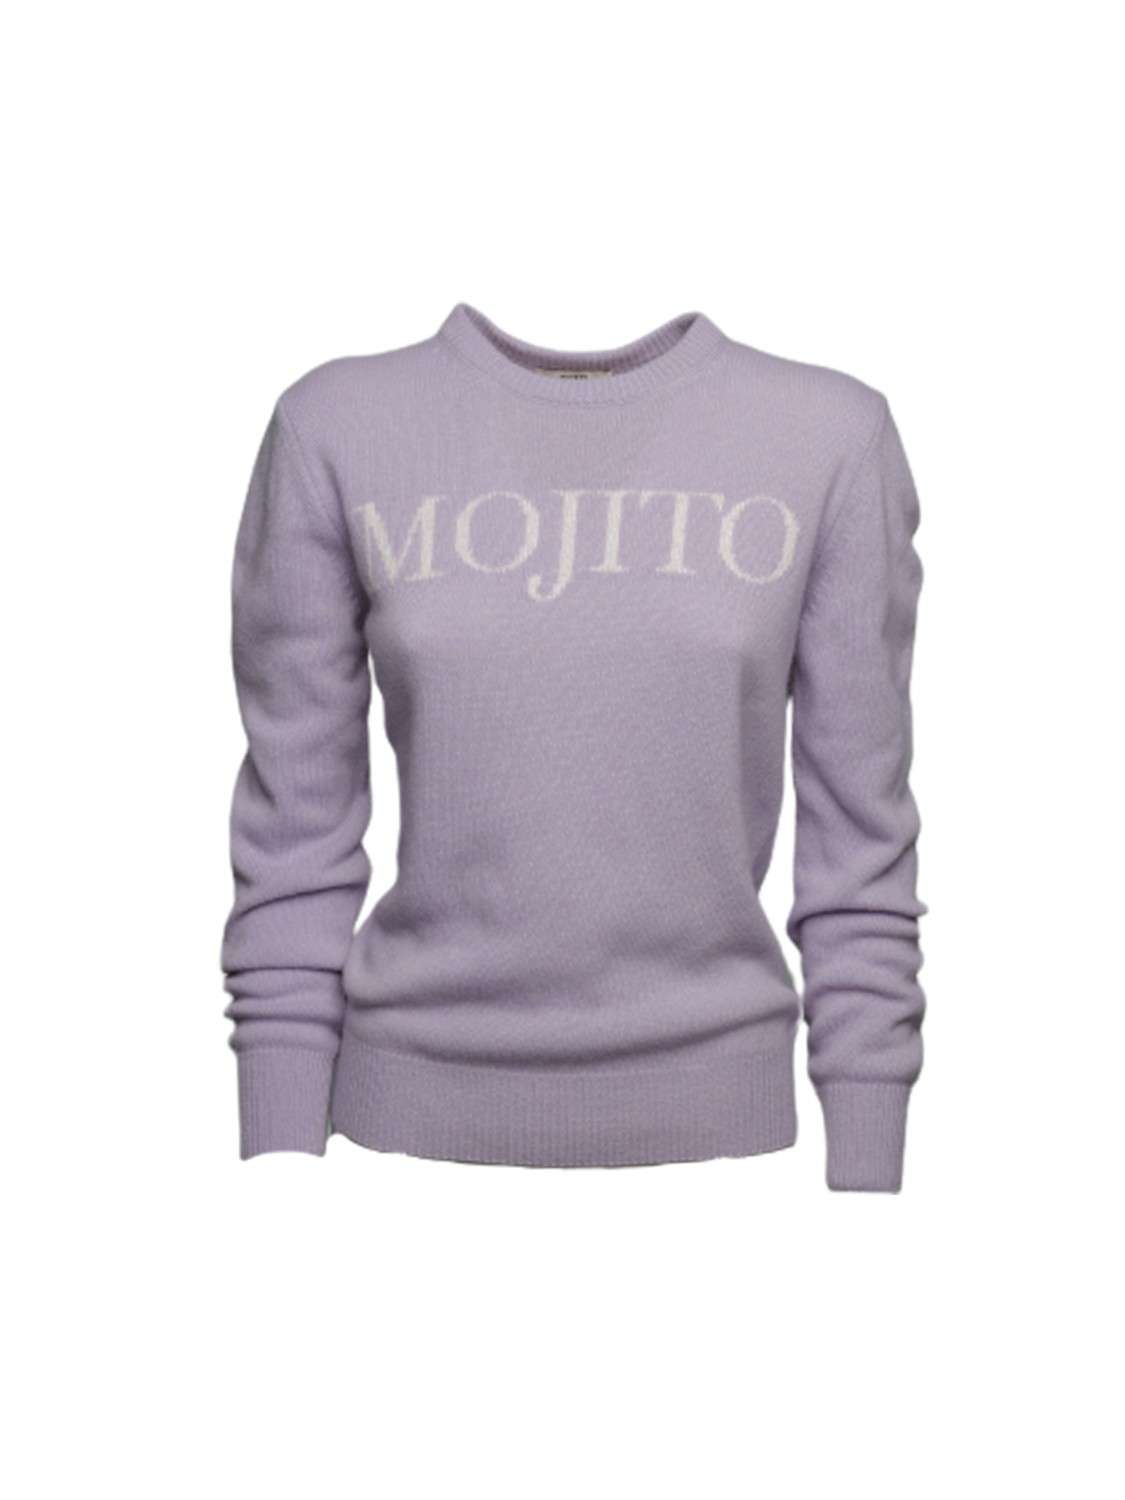 "Mojito" Cashmere Wool Sweater